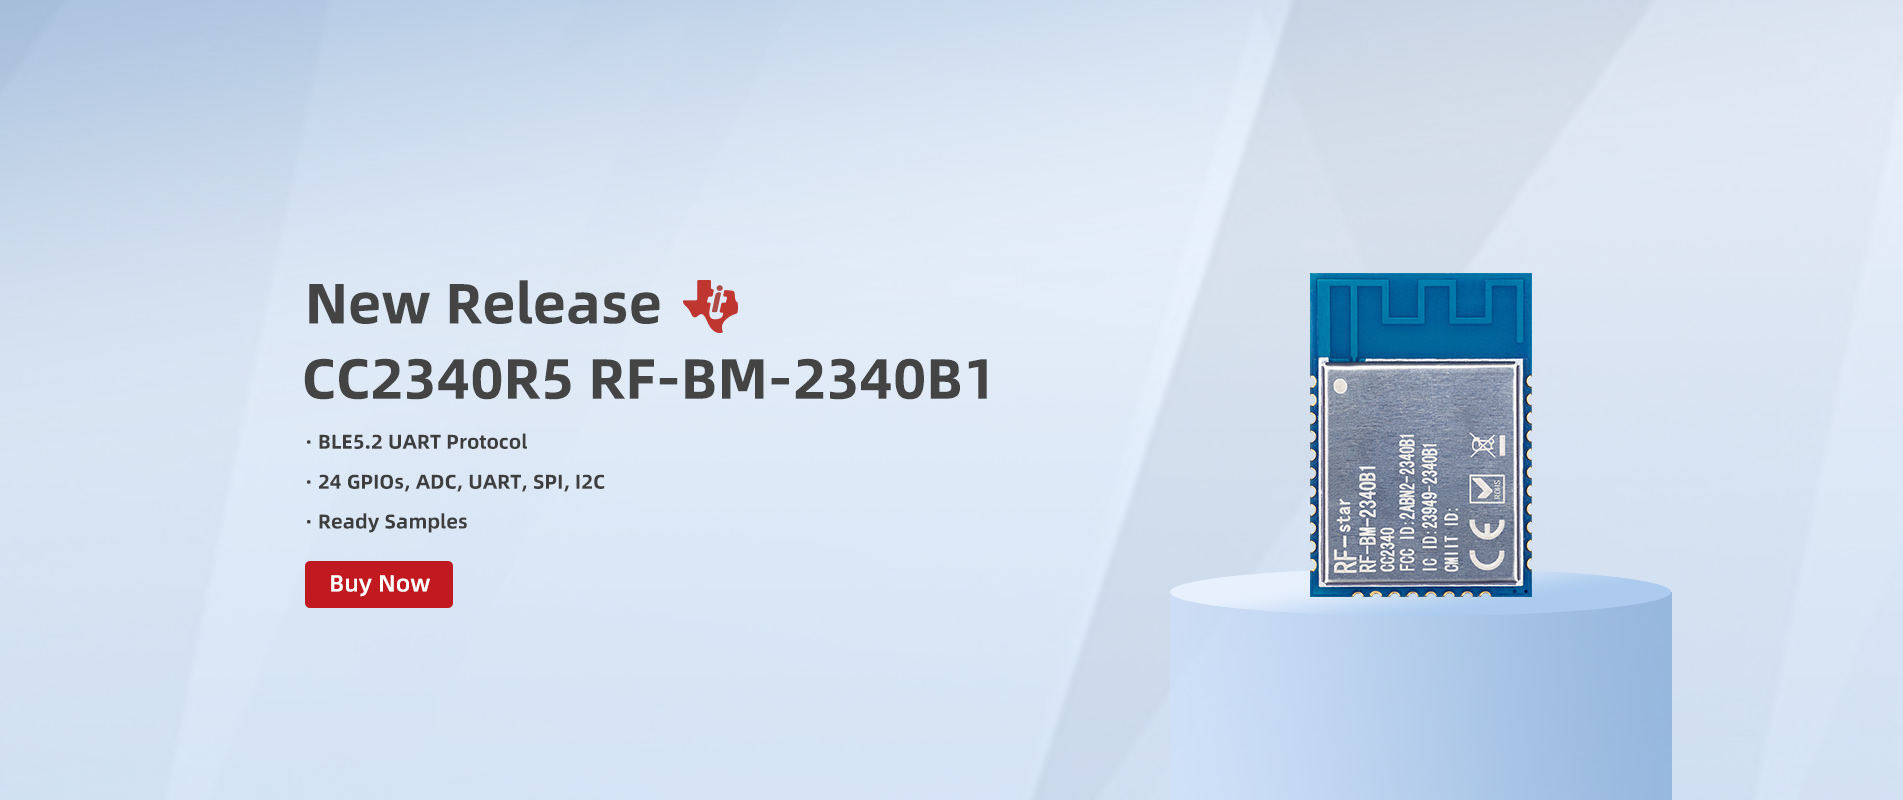 New Release CC2340R5 RF-BM-2340B1